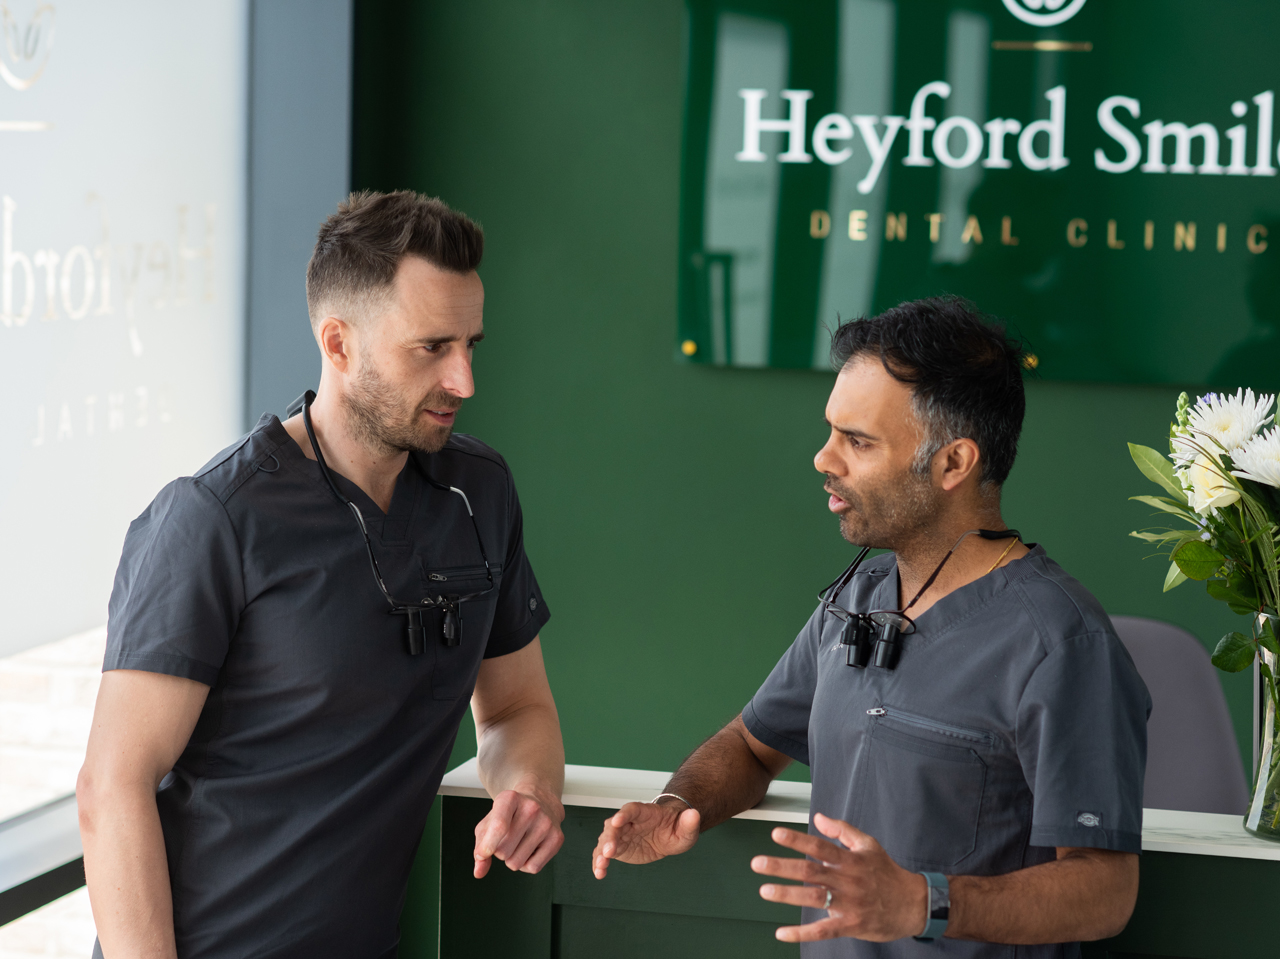 Heyford Smiles Dental Clinic